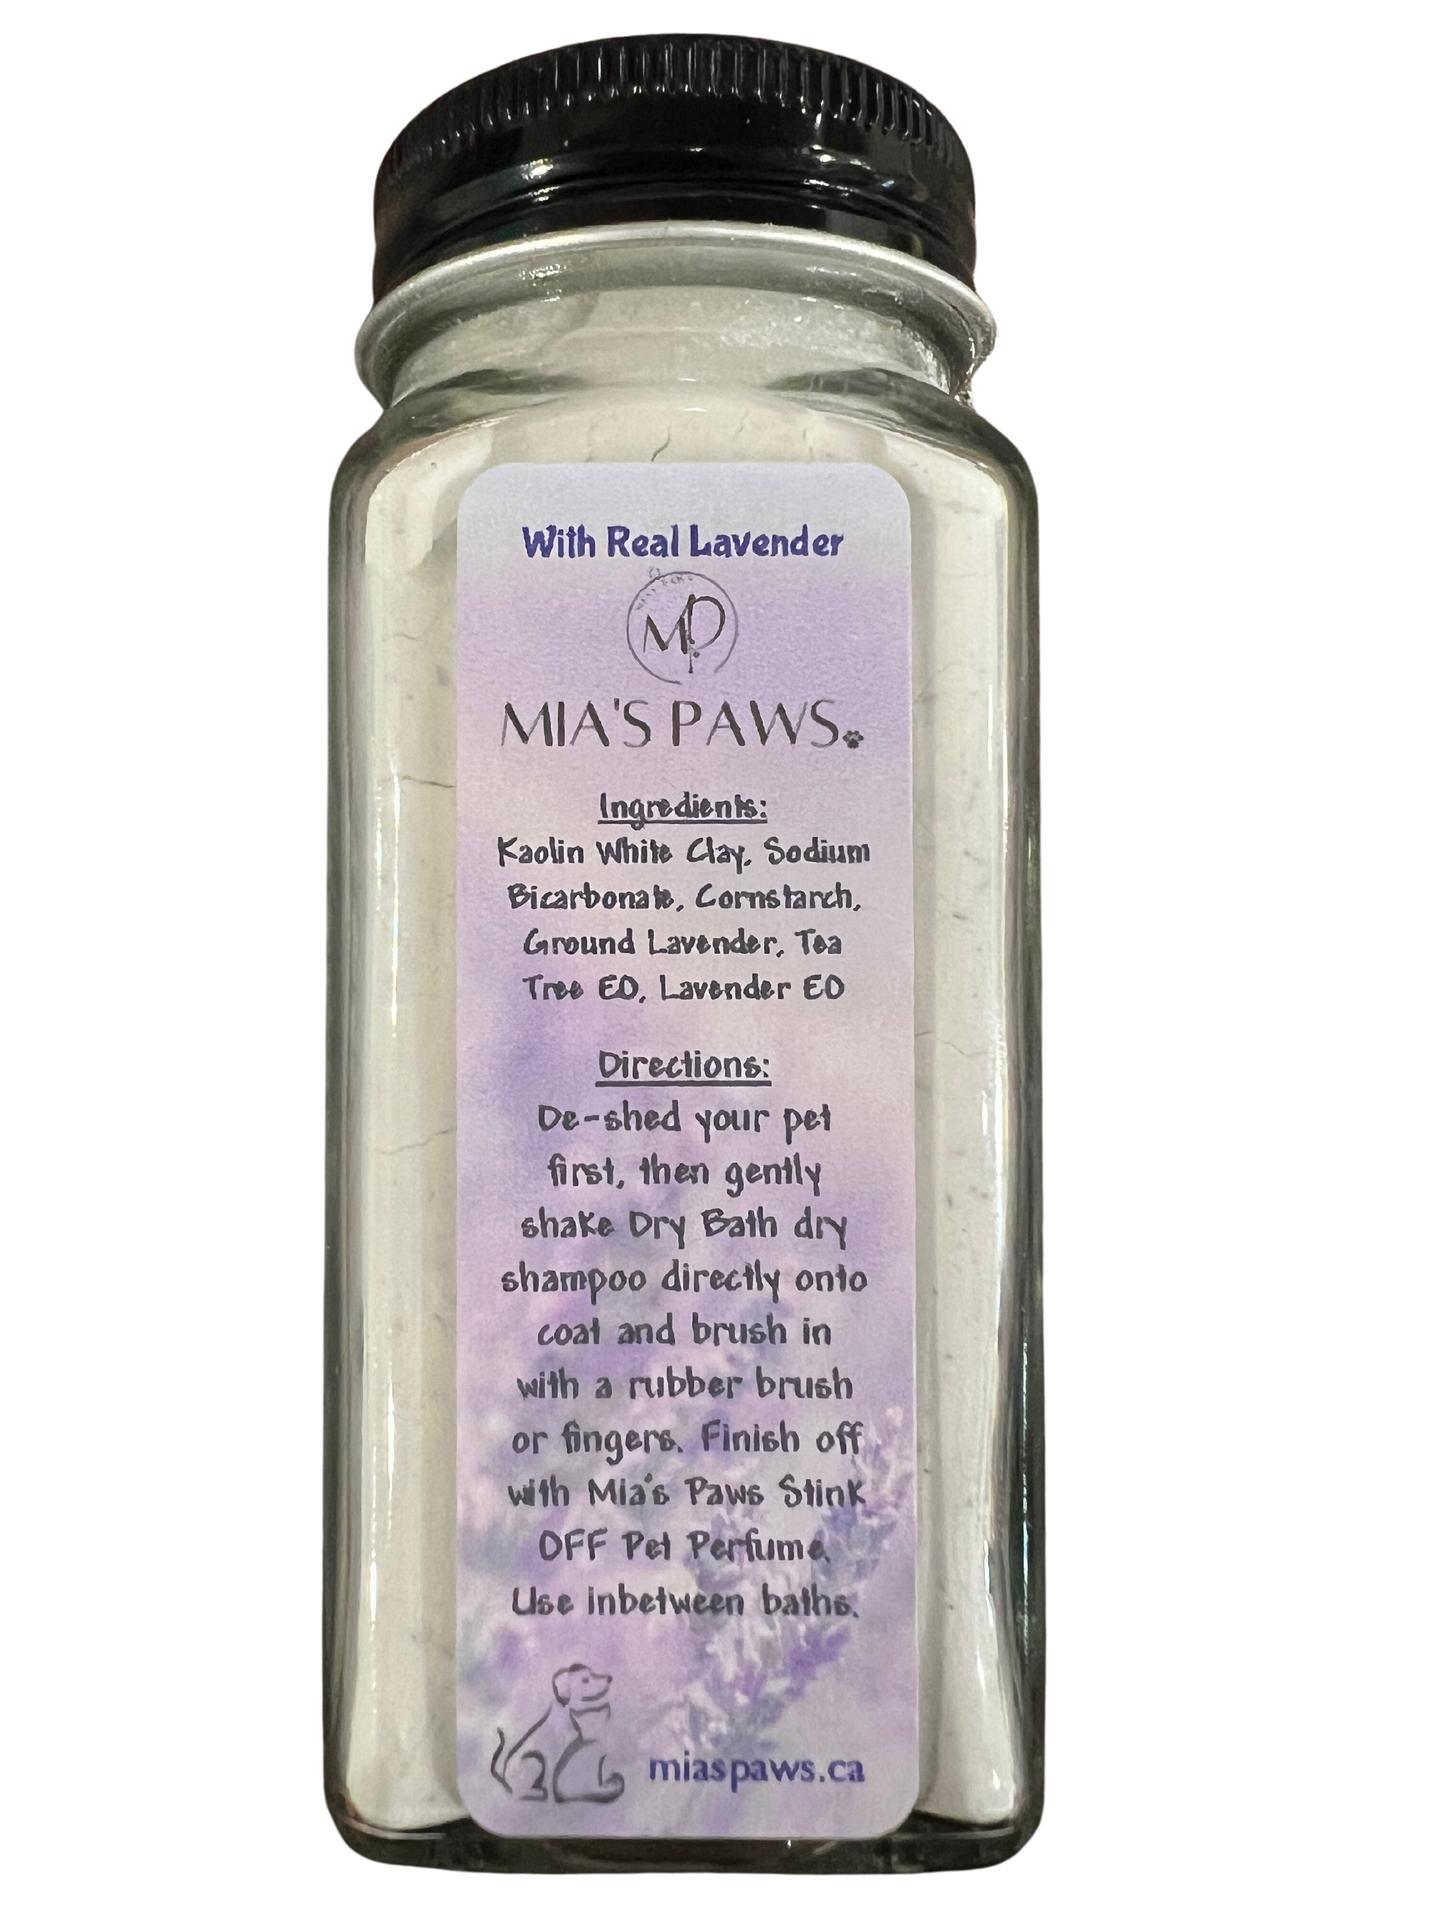 Dry Bath (Dry Shampoo) - Mia's Paws